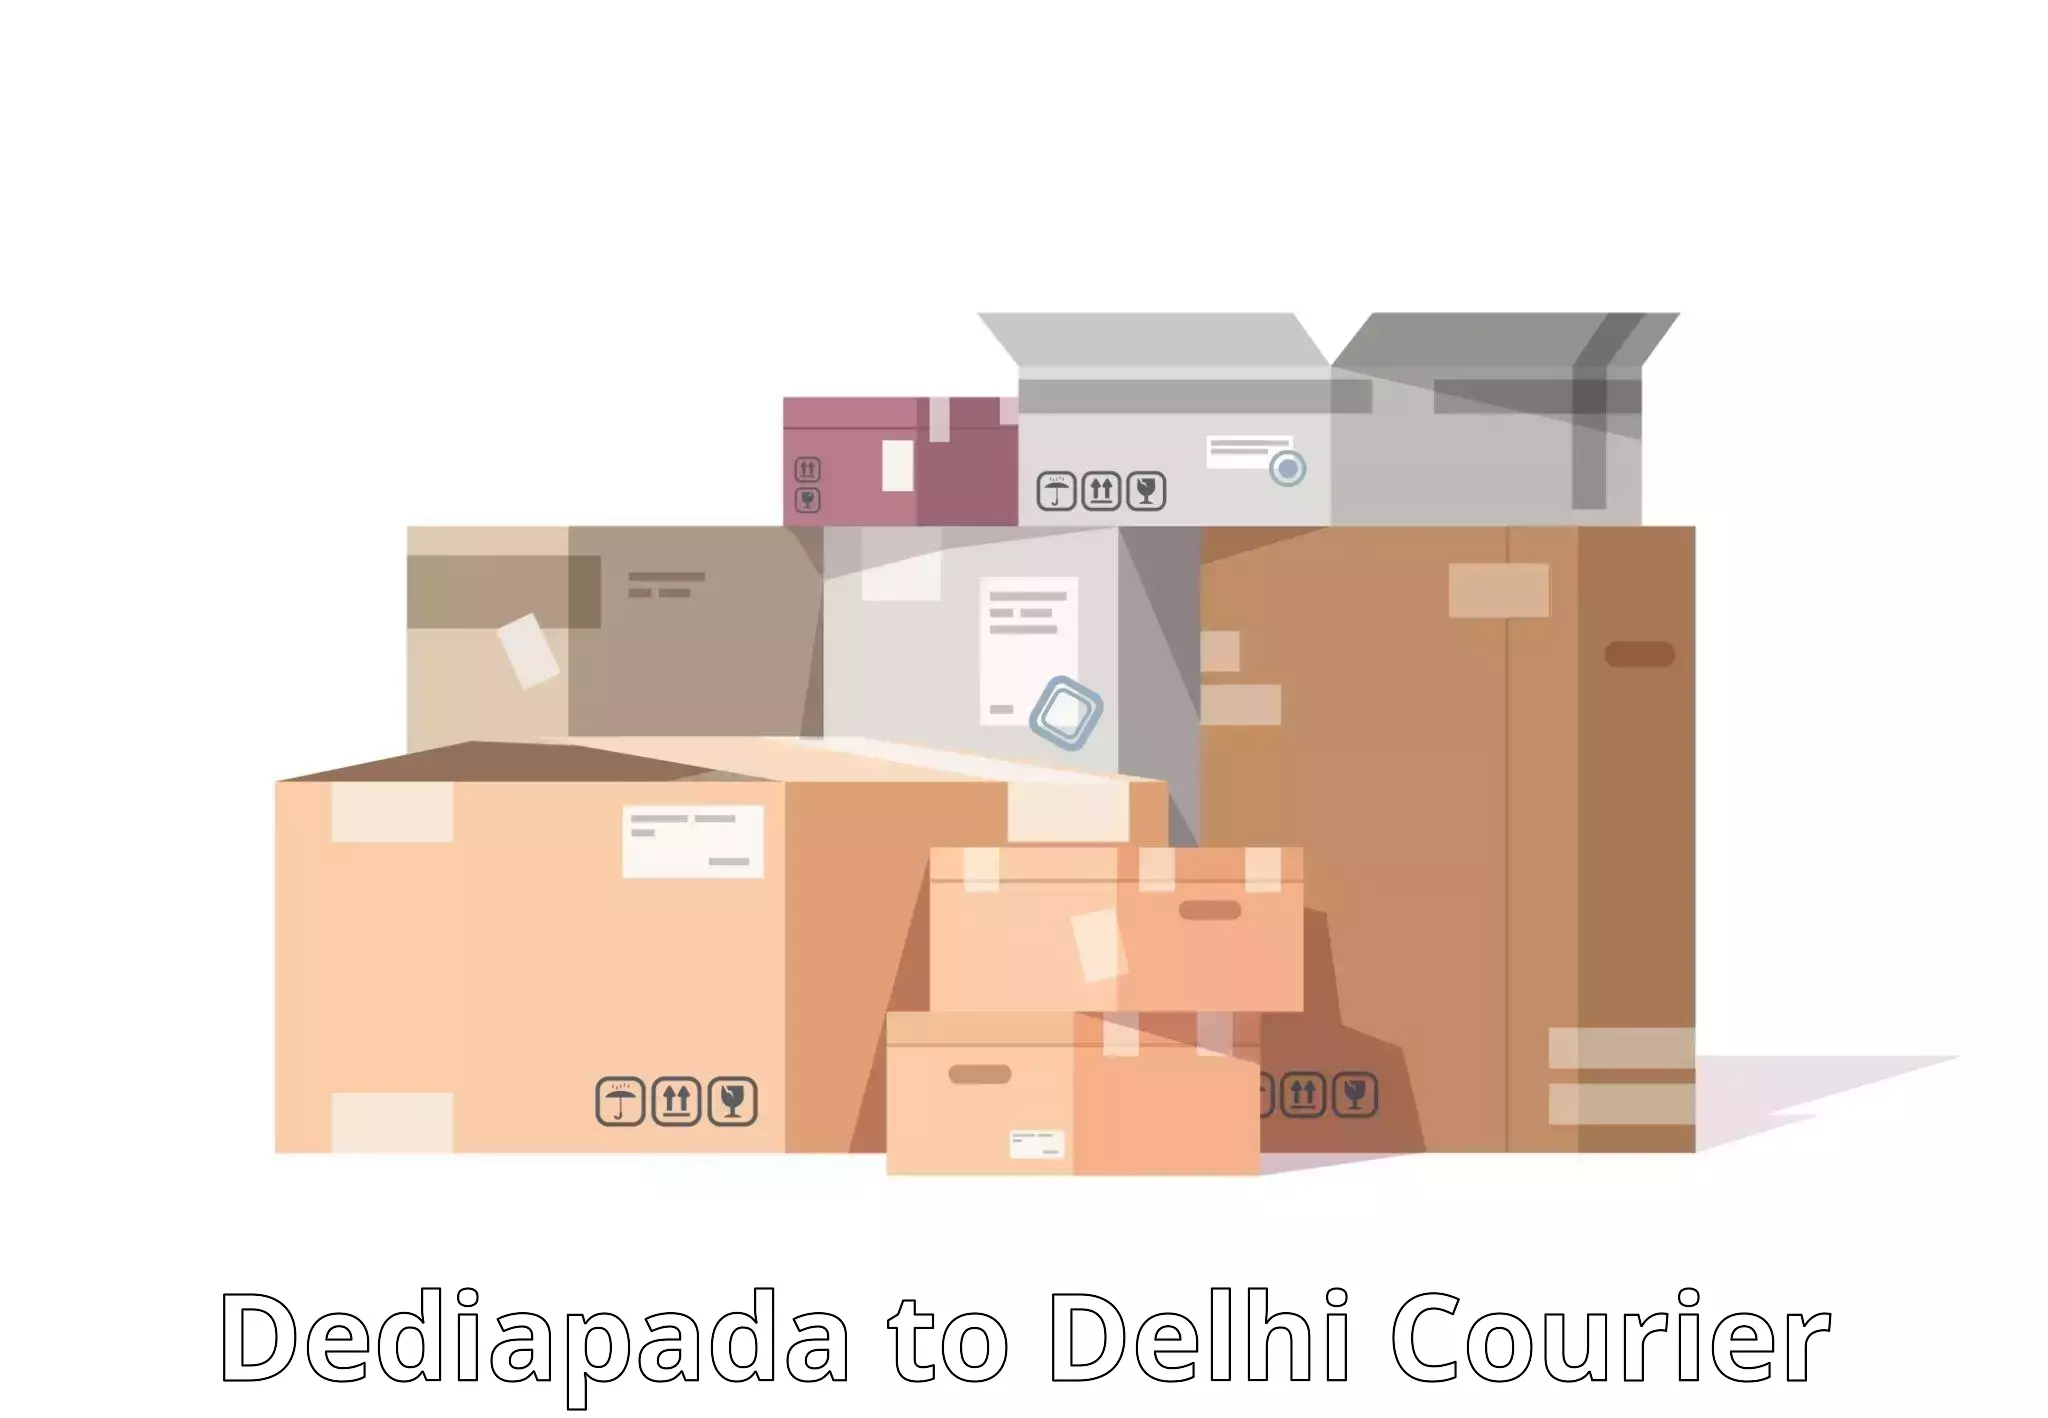 Modern delivery technologies Dediapada to Delhi